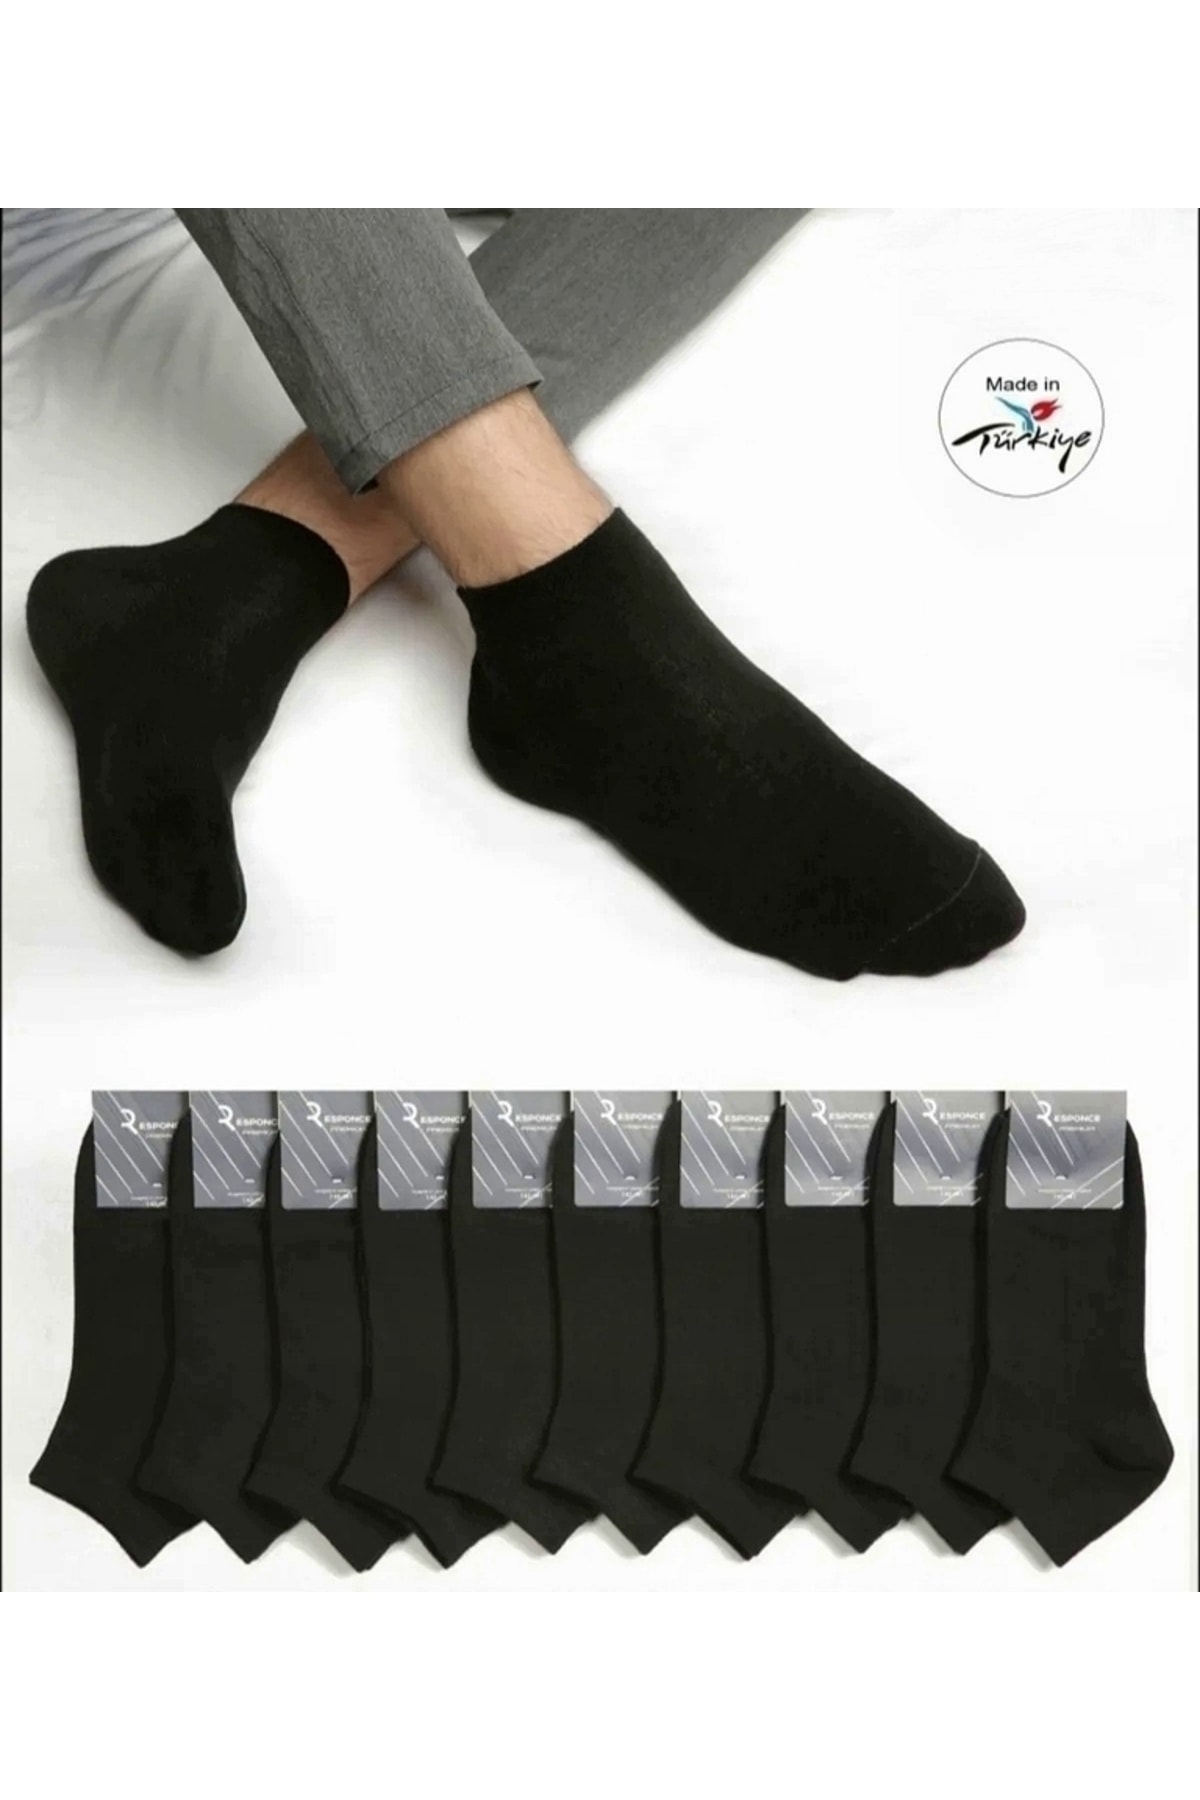 SuFd 6 Adet %80 Pamuklu Kısa Spor Çorap Patik Çorap Güçlendirilmiş Topuklu Siyah